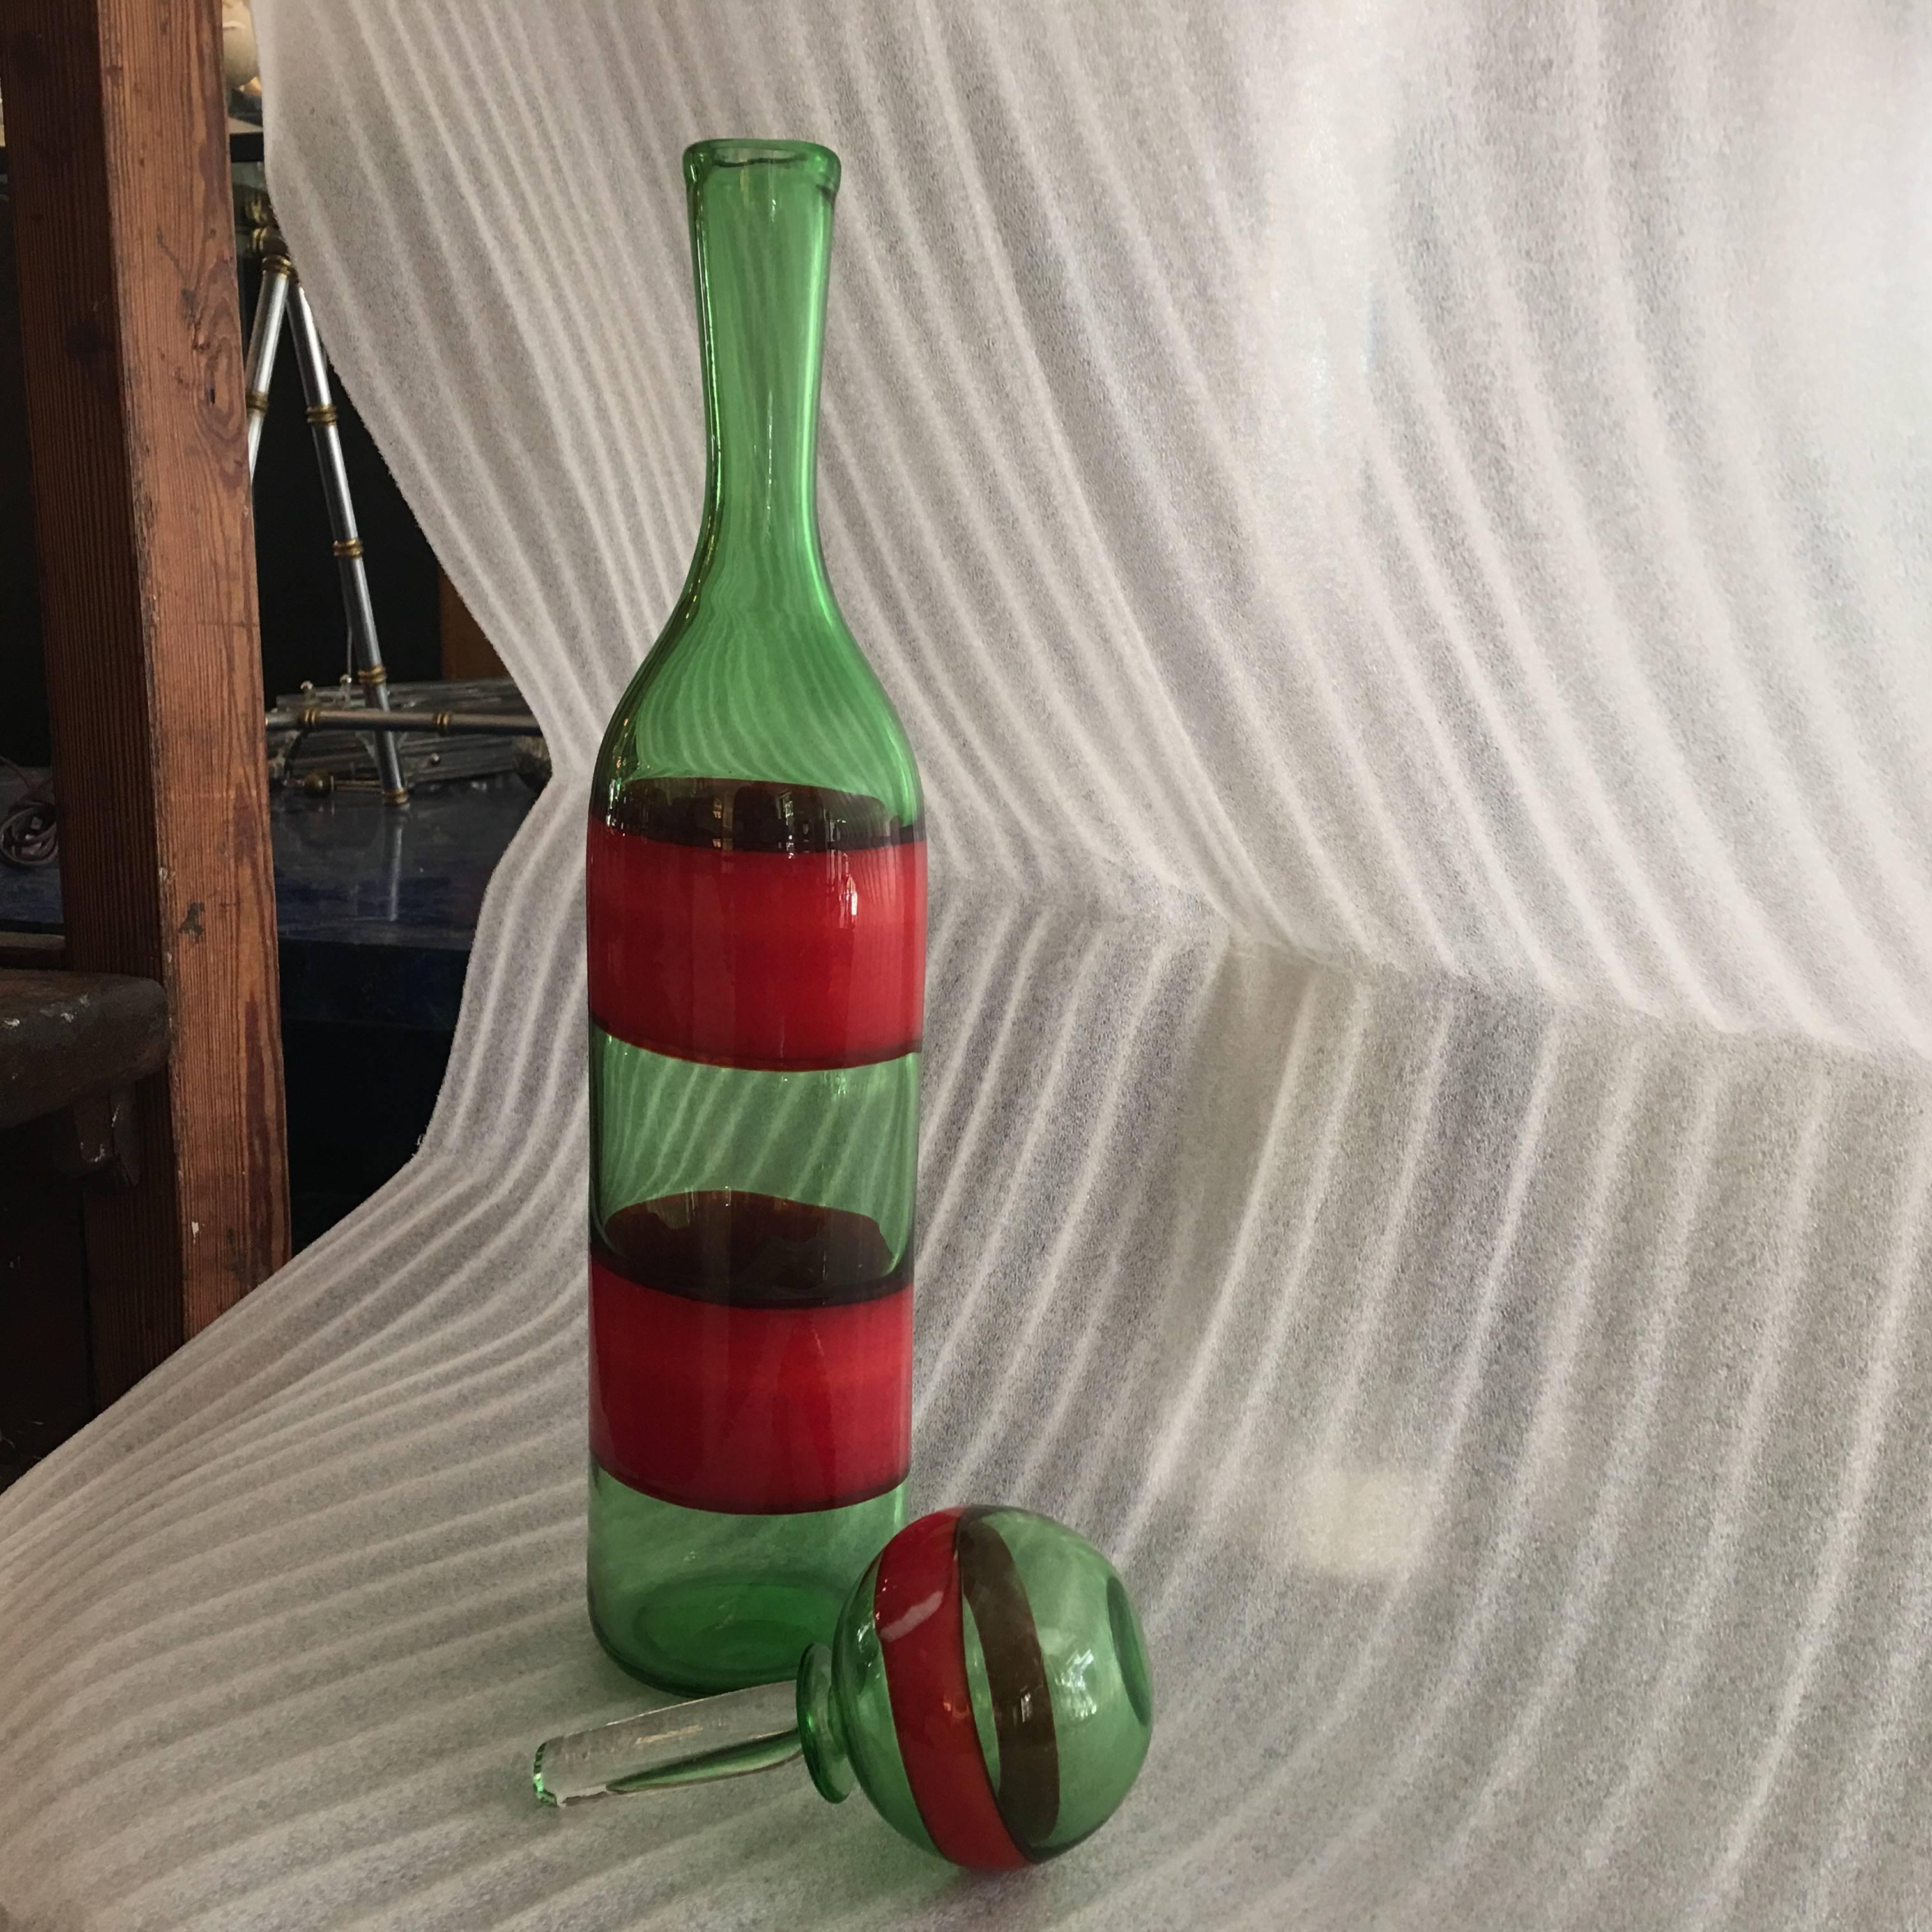 Rare hand blown Murano glass decanter with stopper by Fulvio Bianconi for Venini Co. Murano. Rich green and red stripes. 
Signed with Acid stamp: Venini Murano Italia.